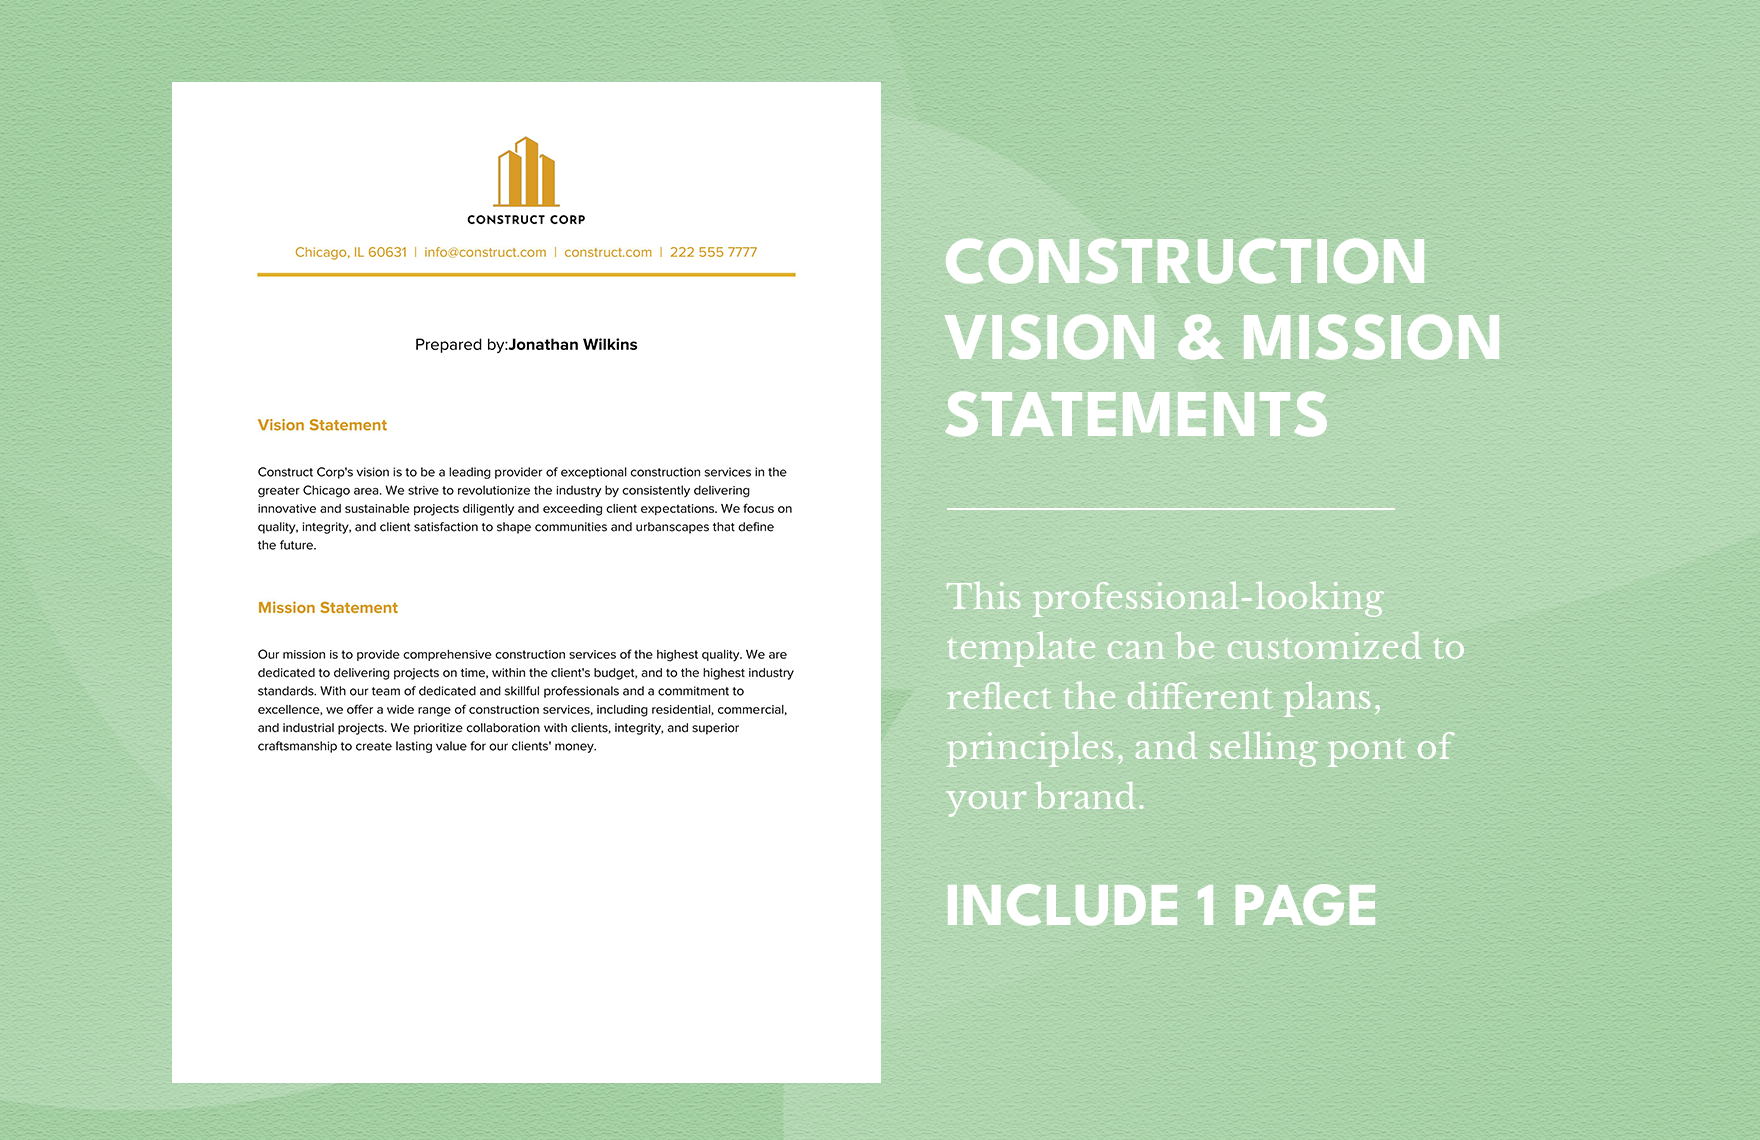 Construction Vision & Mission Statements